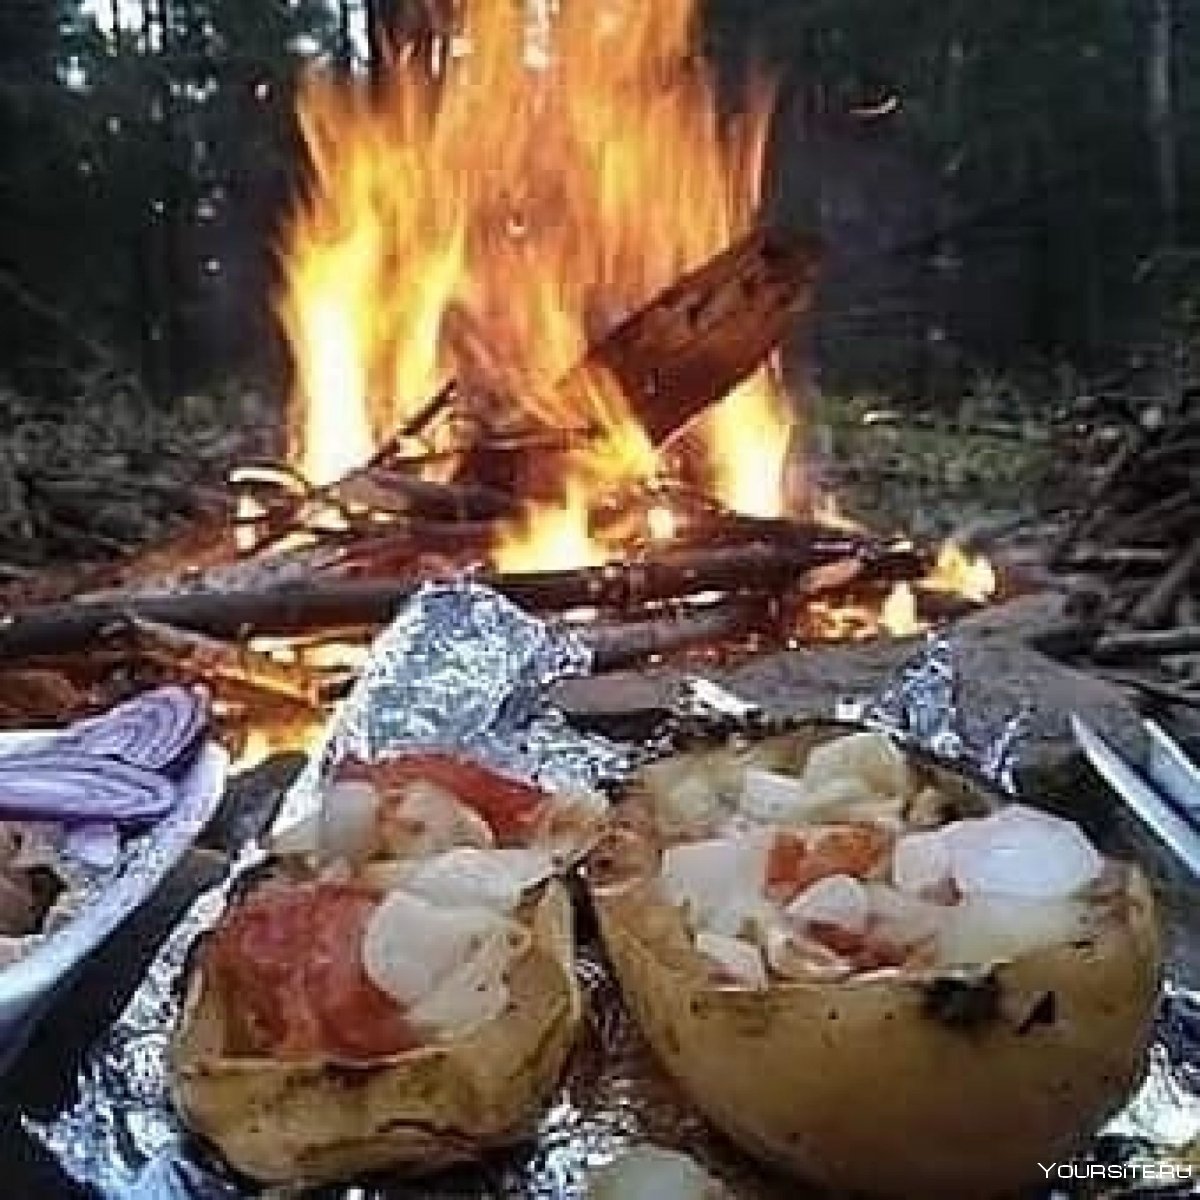 Ужин в лесу